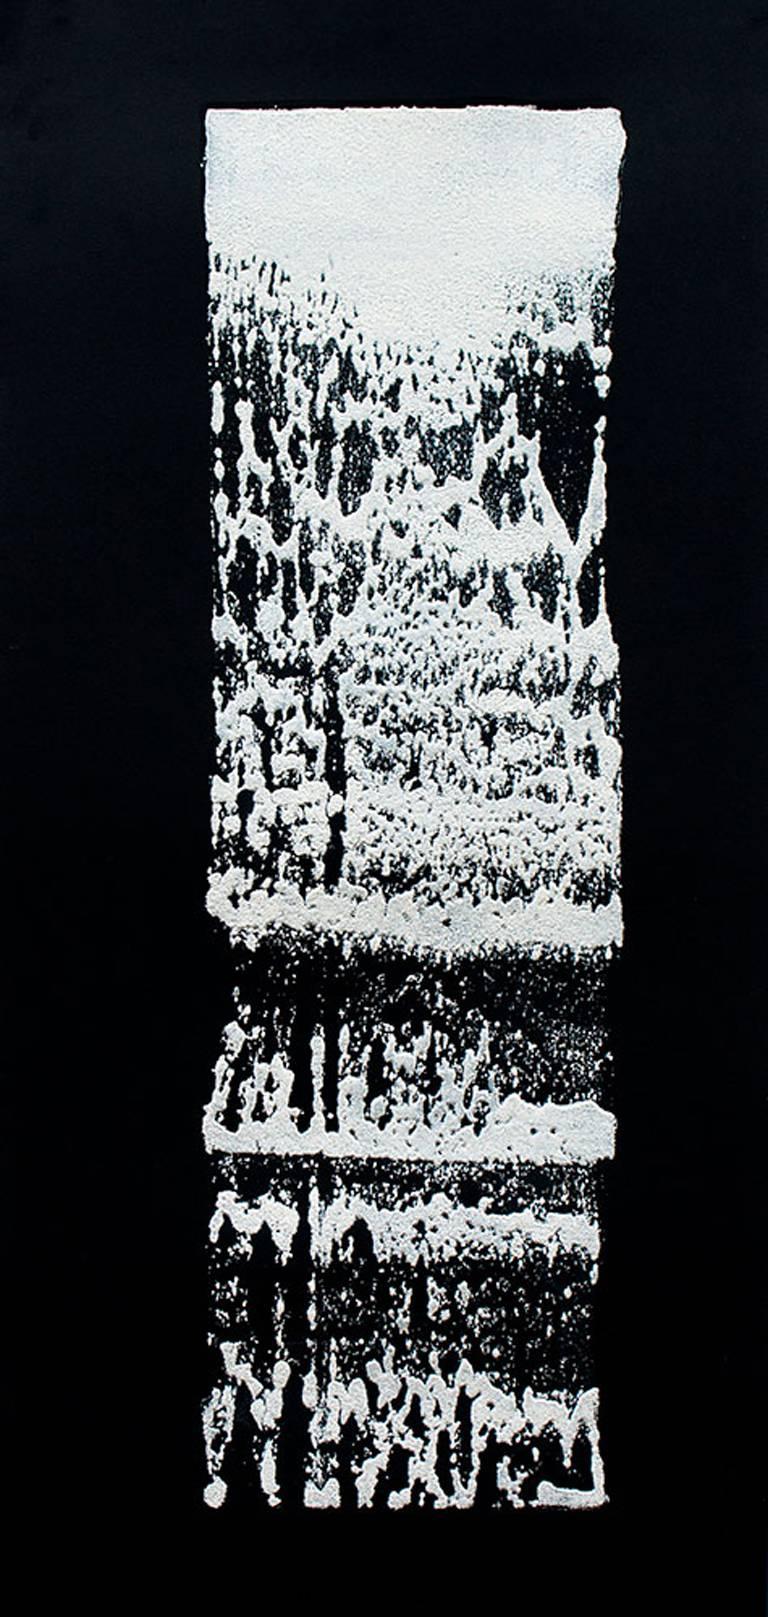 James Nares Abstract Print - Road Paint Print 4